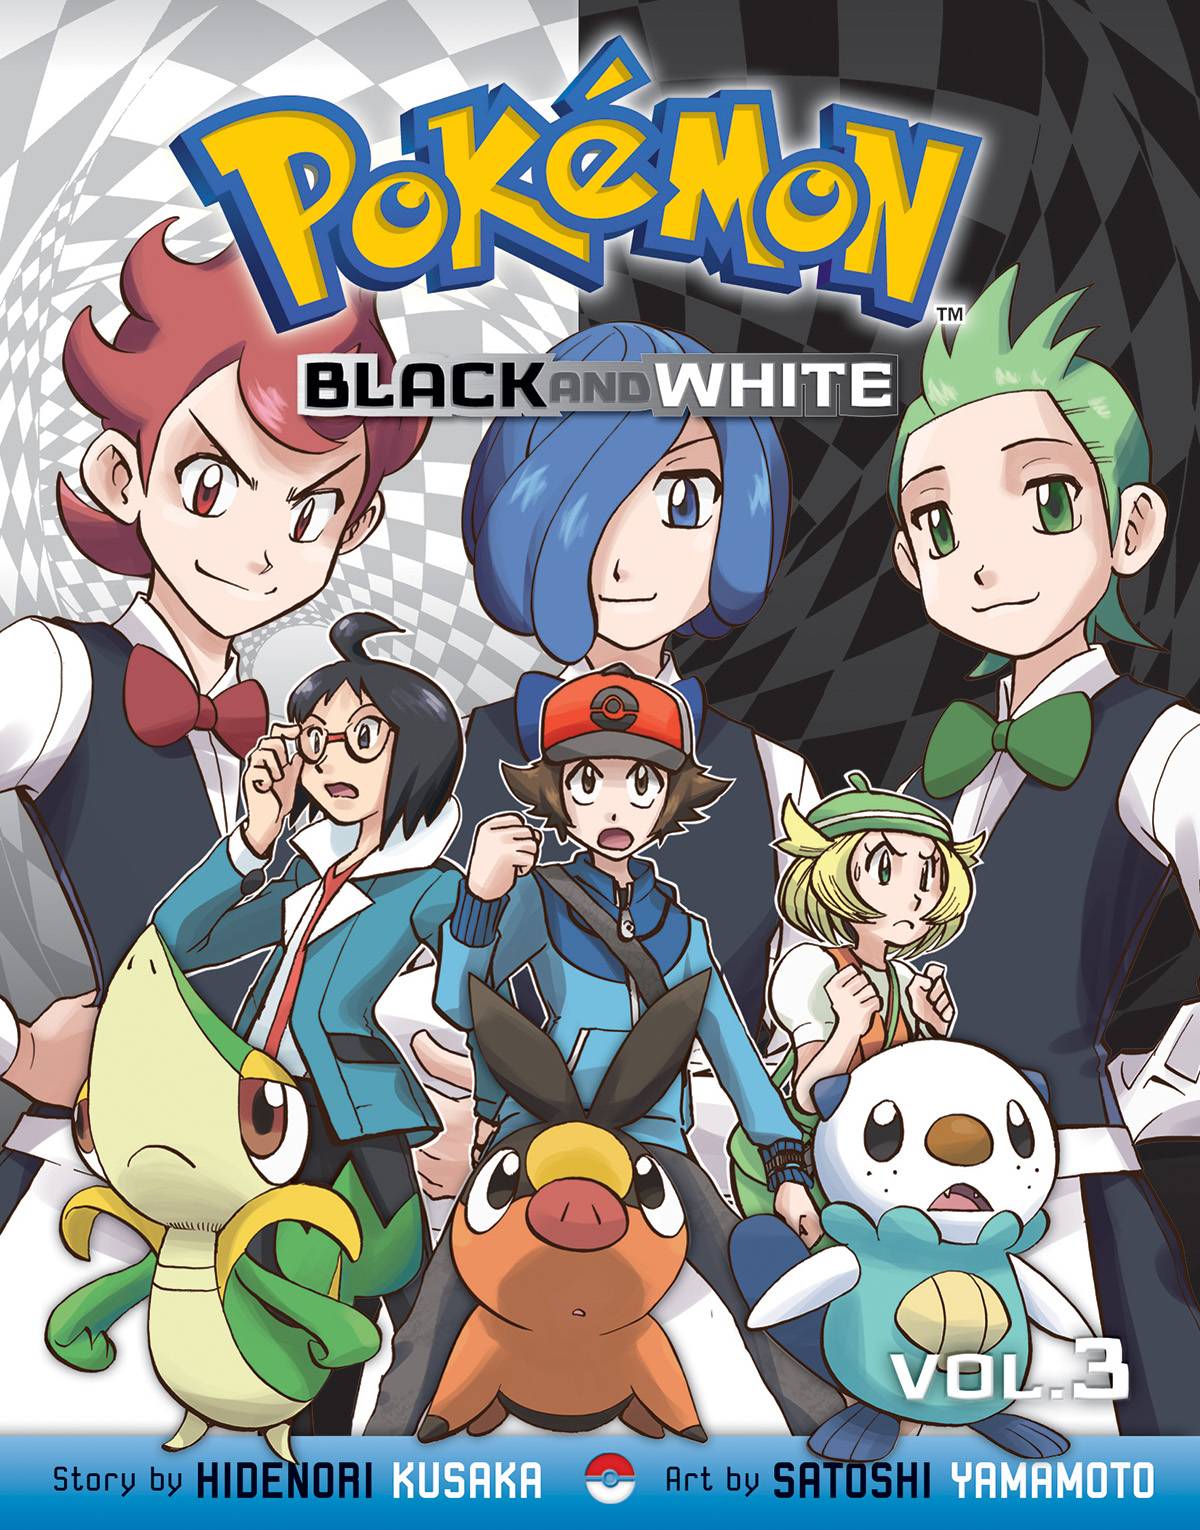 Pokémon Black and White, Vol. 1 (1) (Pokemon): Kusaka, Hidenori